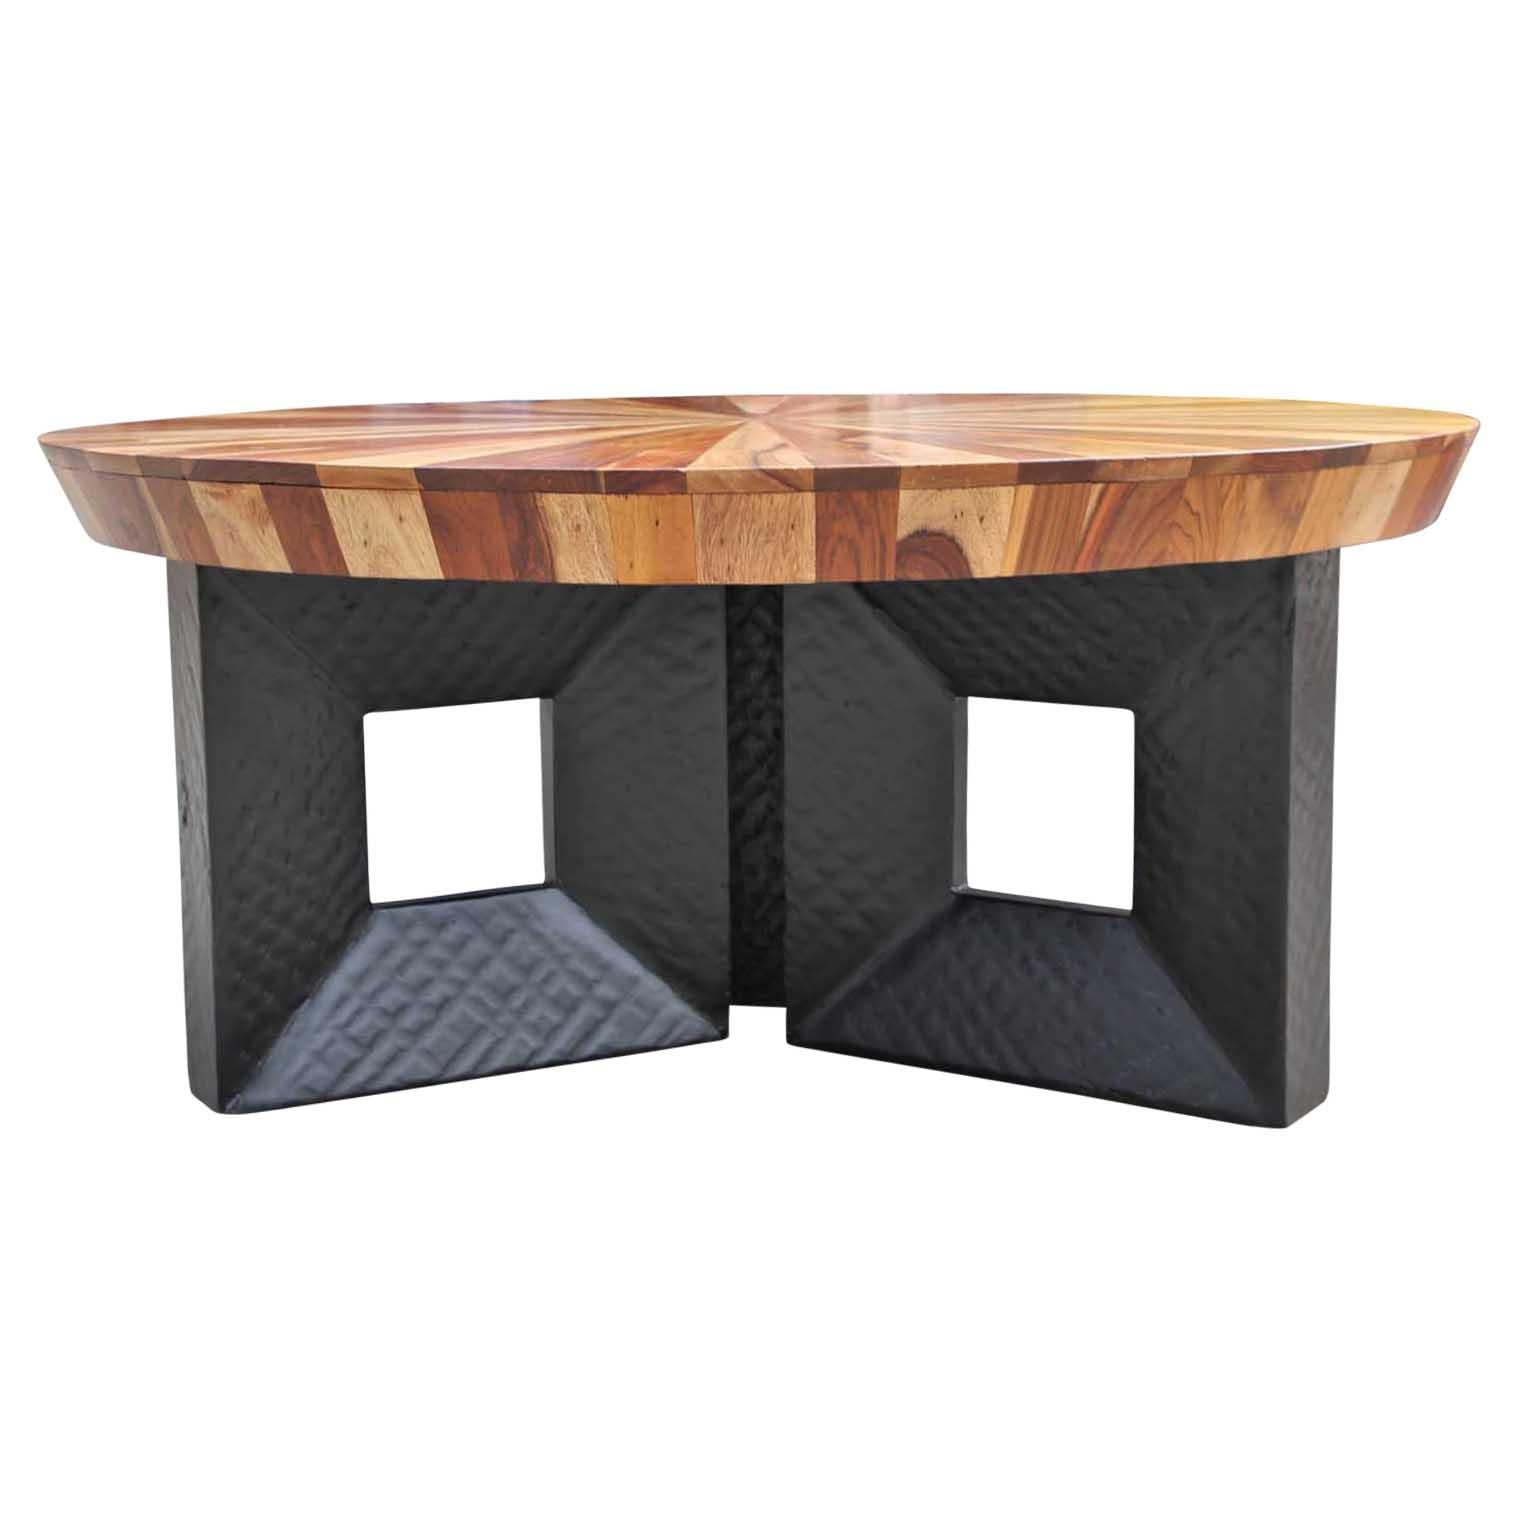 20th Century Stunning Sunburst Round Wooden Modern Deco Style Coffee Table with Black Base